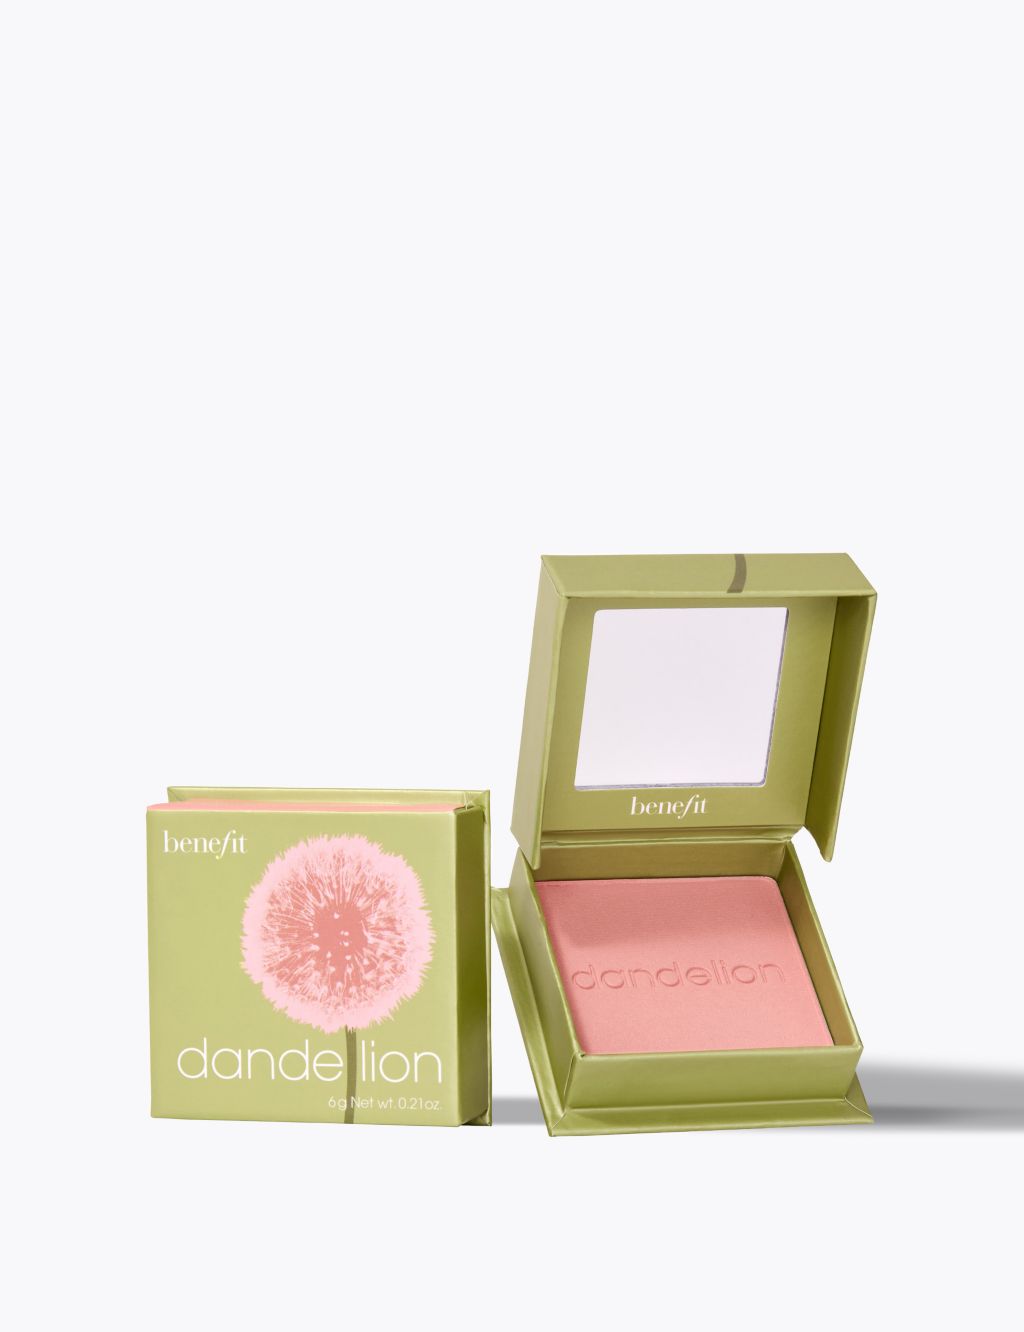 Dandelion Blusher & Brightening Finishing Face Powder 6g